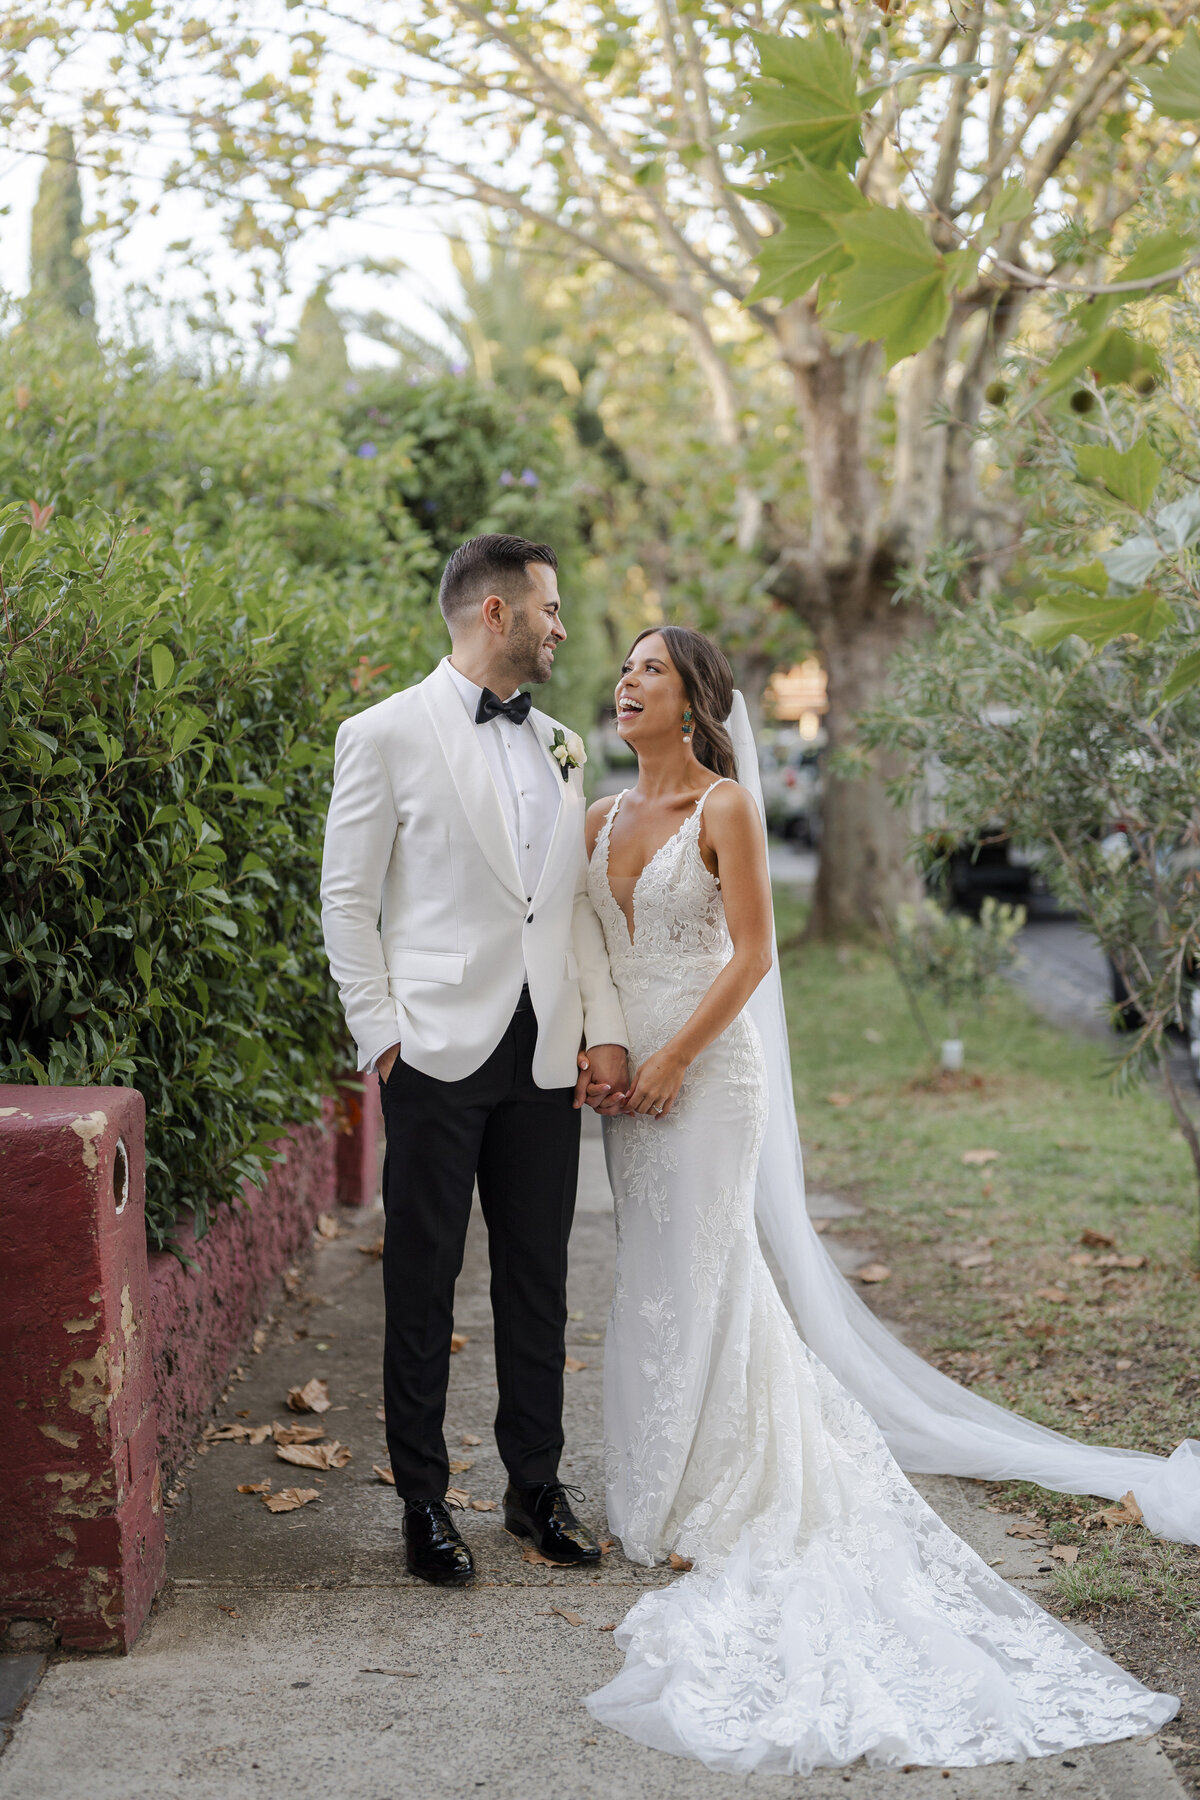 Karina & Daniel Quat Quatta Melbourne Wedding Photography_170